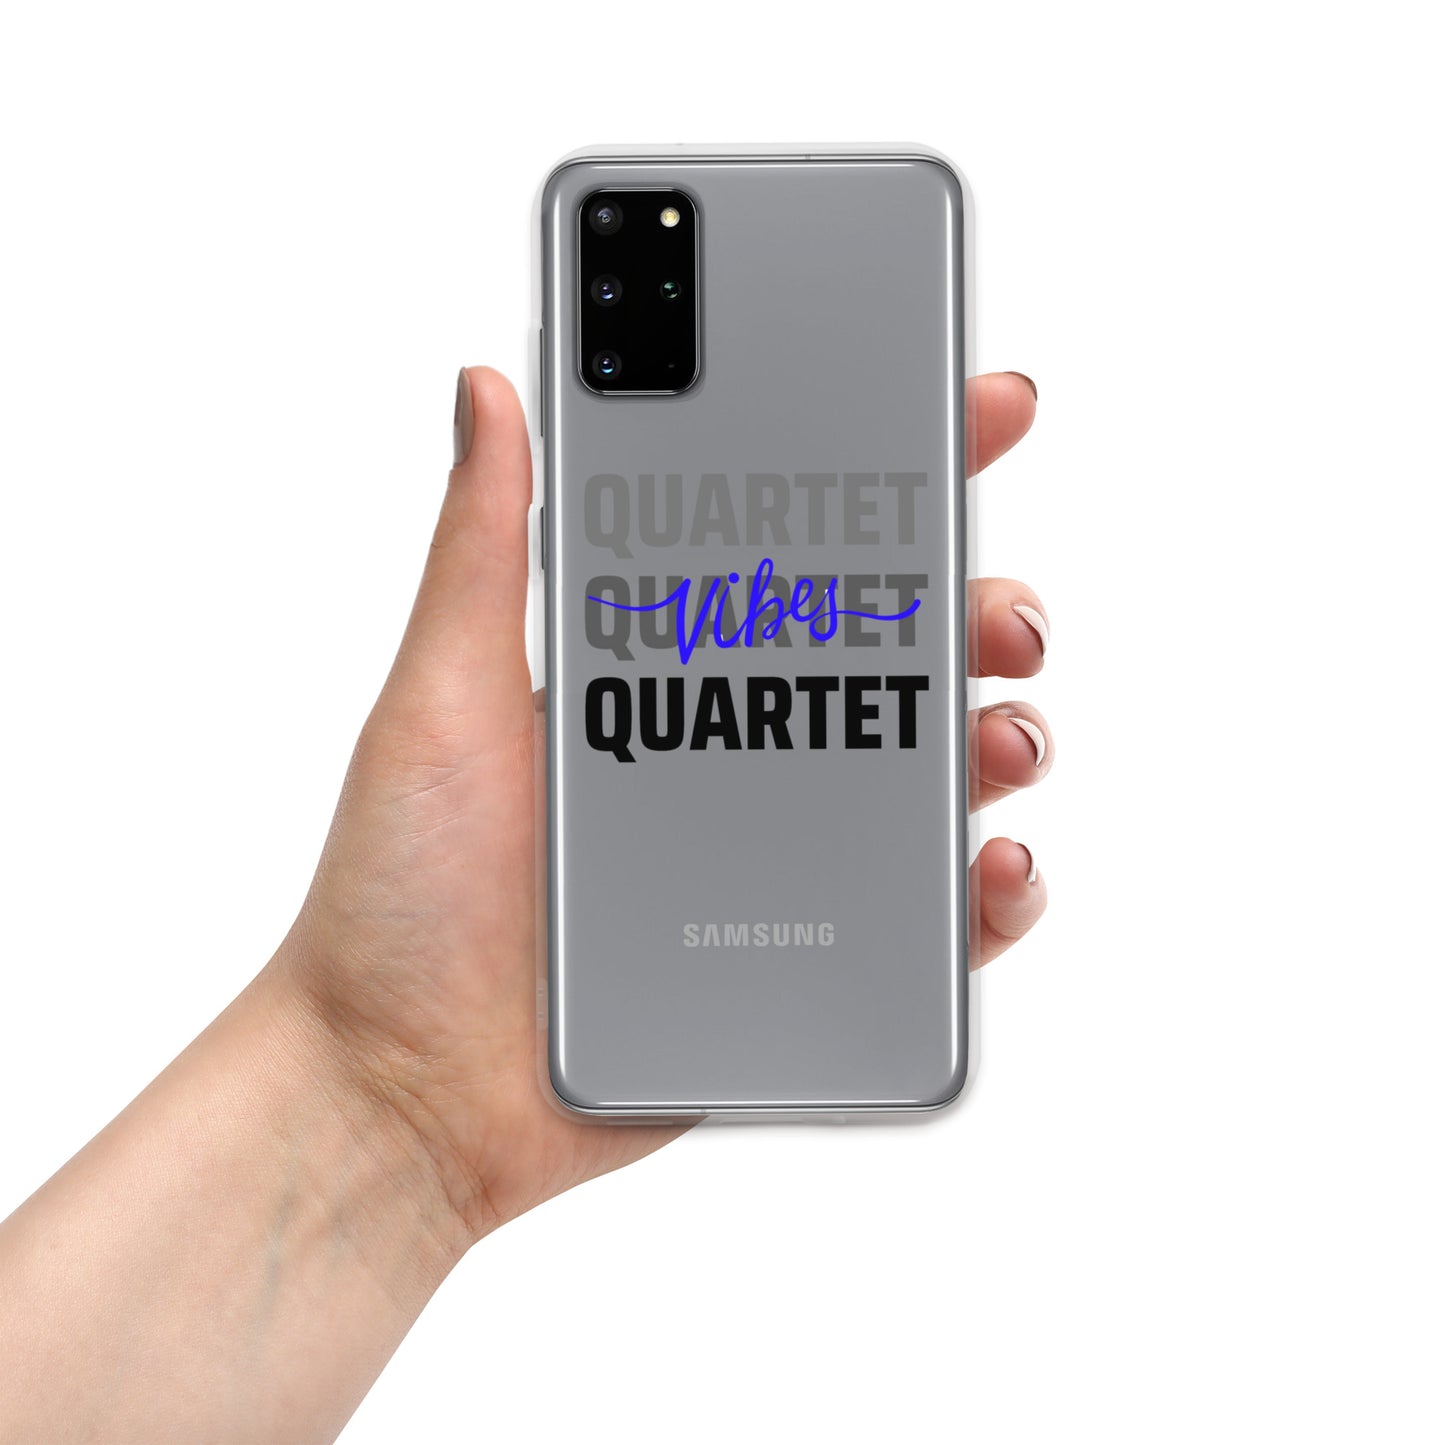 Quartet Vibes Clear Case for Samsung®